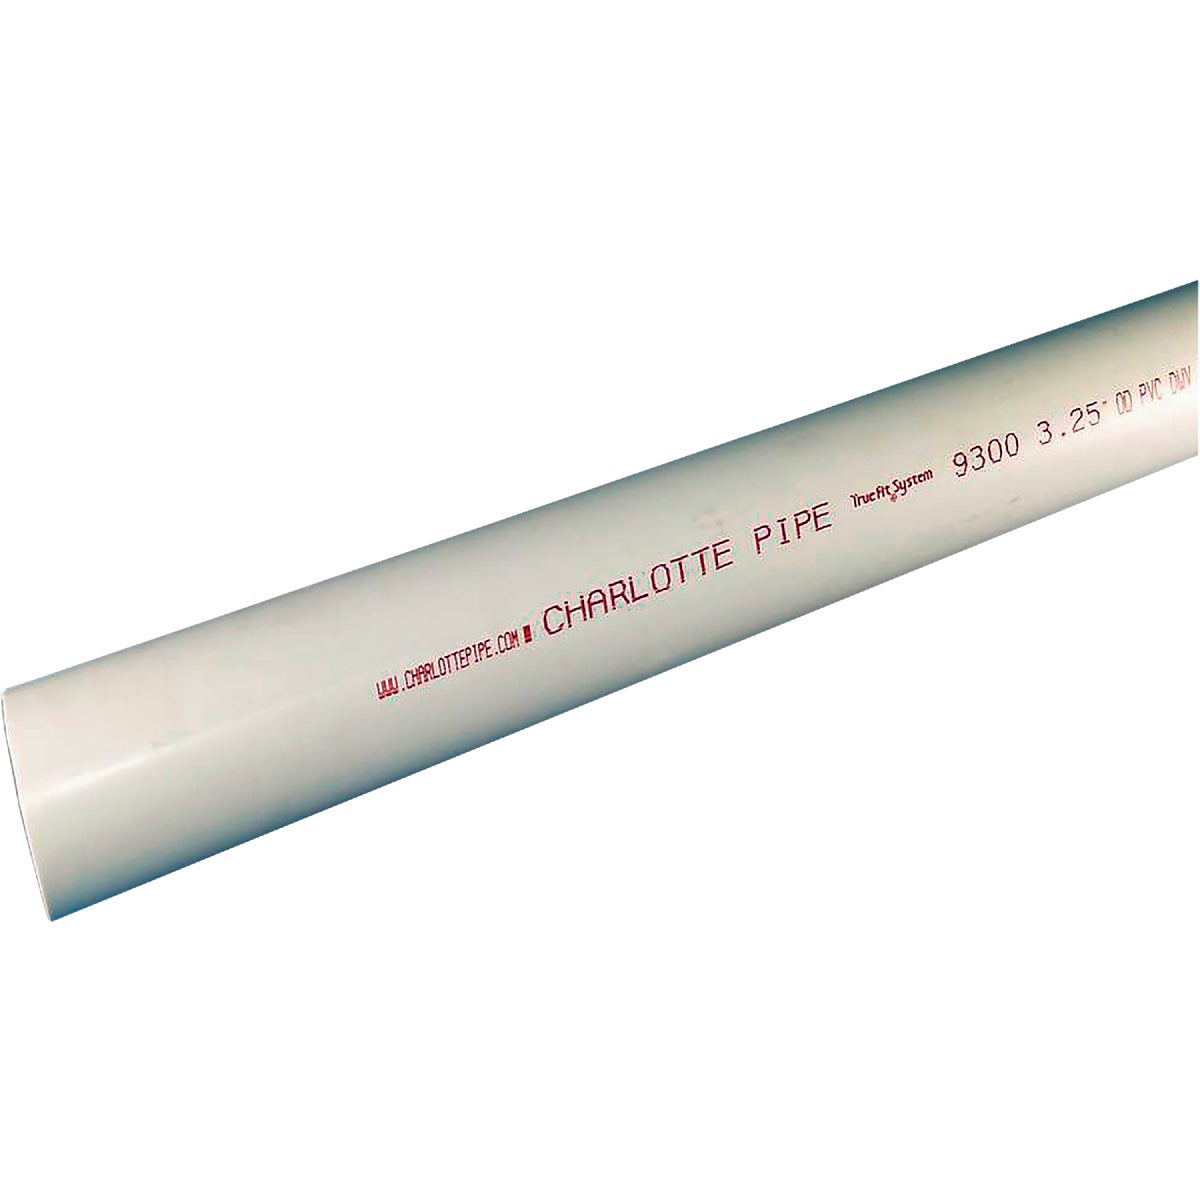 Charlotte Pipe 3 In. x 10 Ft. Schedule 30 Rigid PVC-DWV Pipe